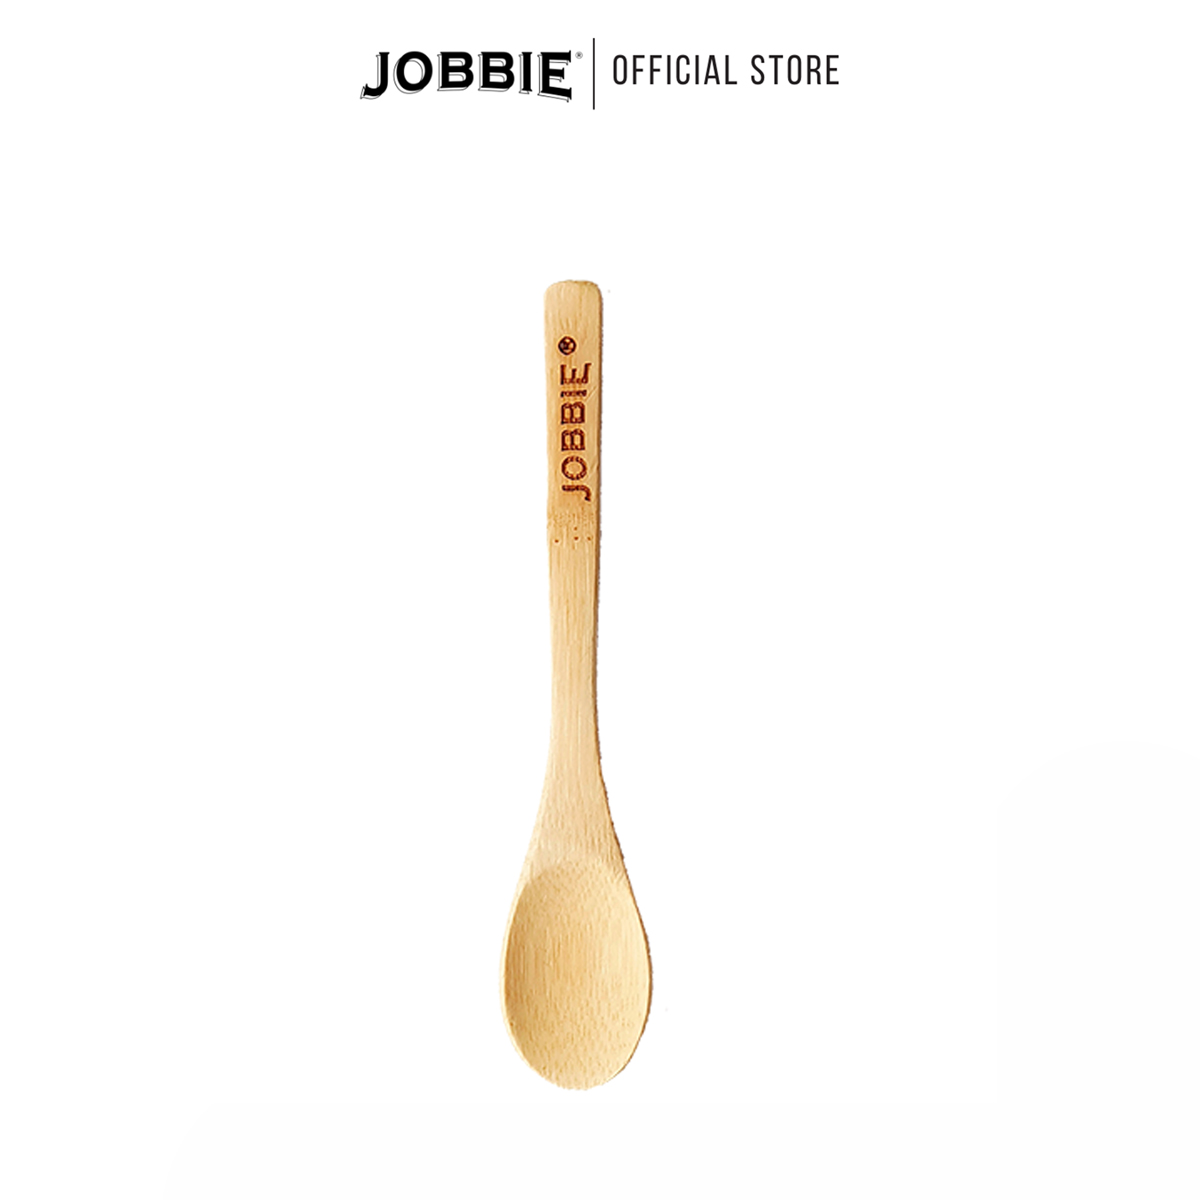 JOBBIE Key to Happiness (Wooden Peanut Spoon)